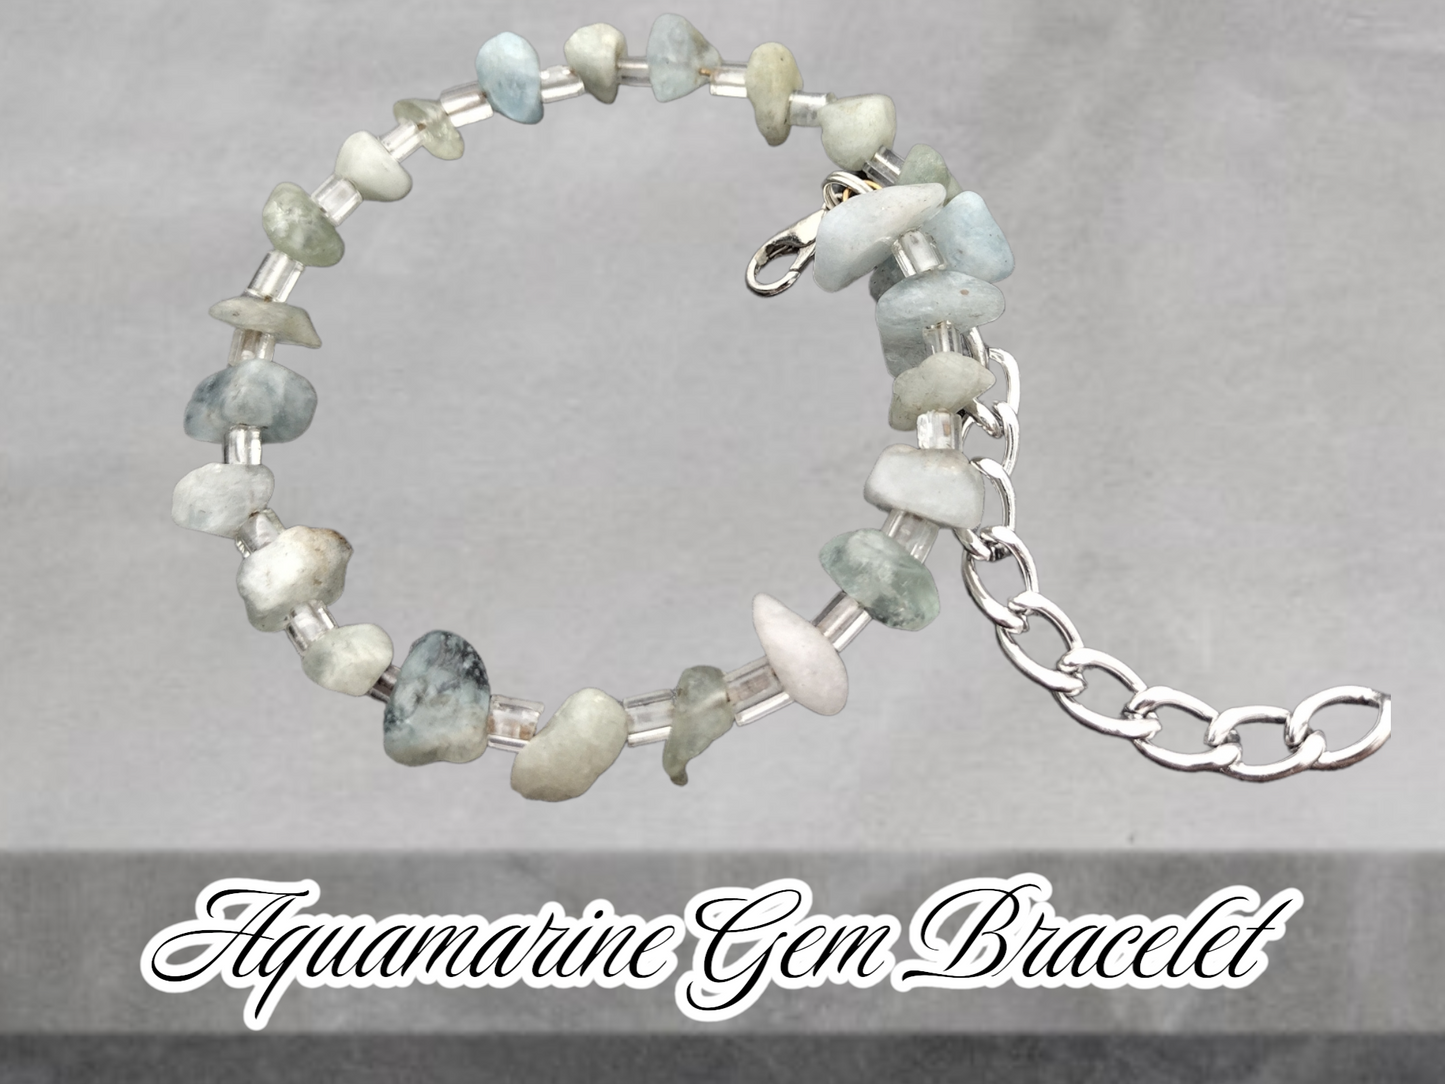 Aquamarine gem bracelet